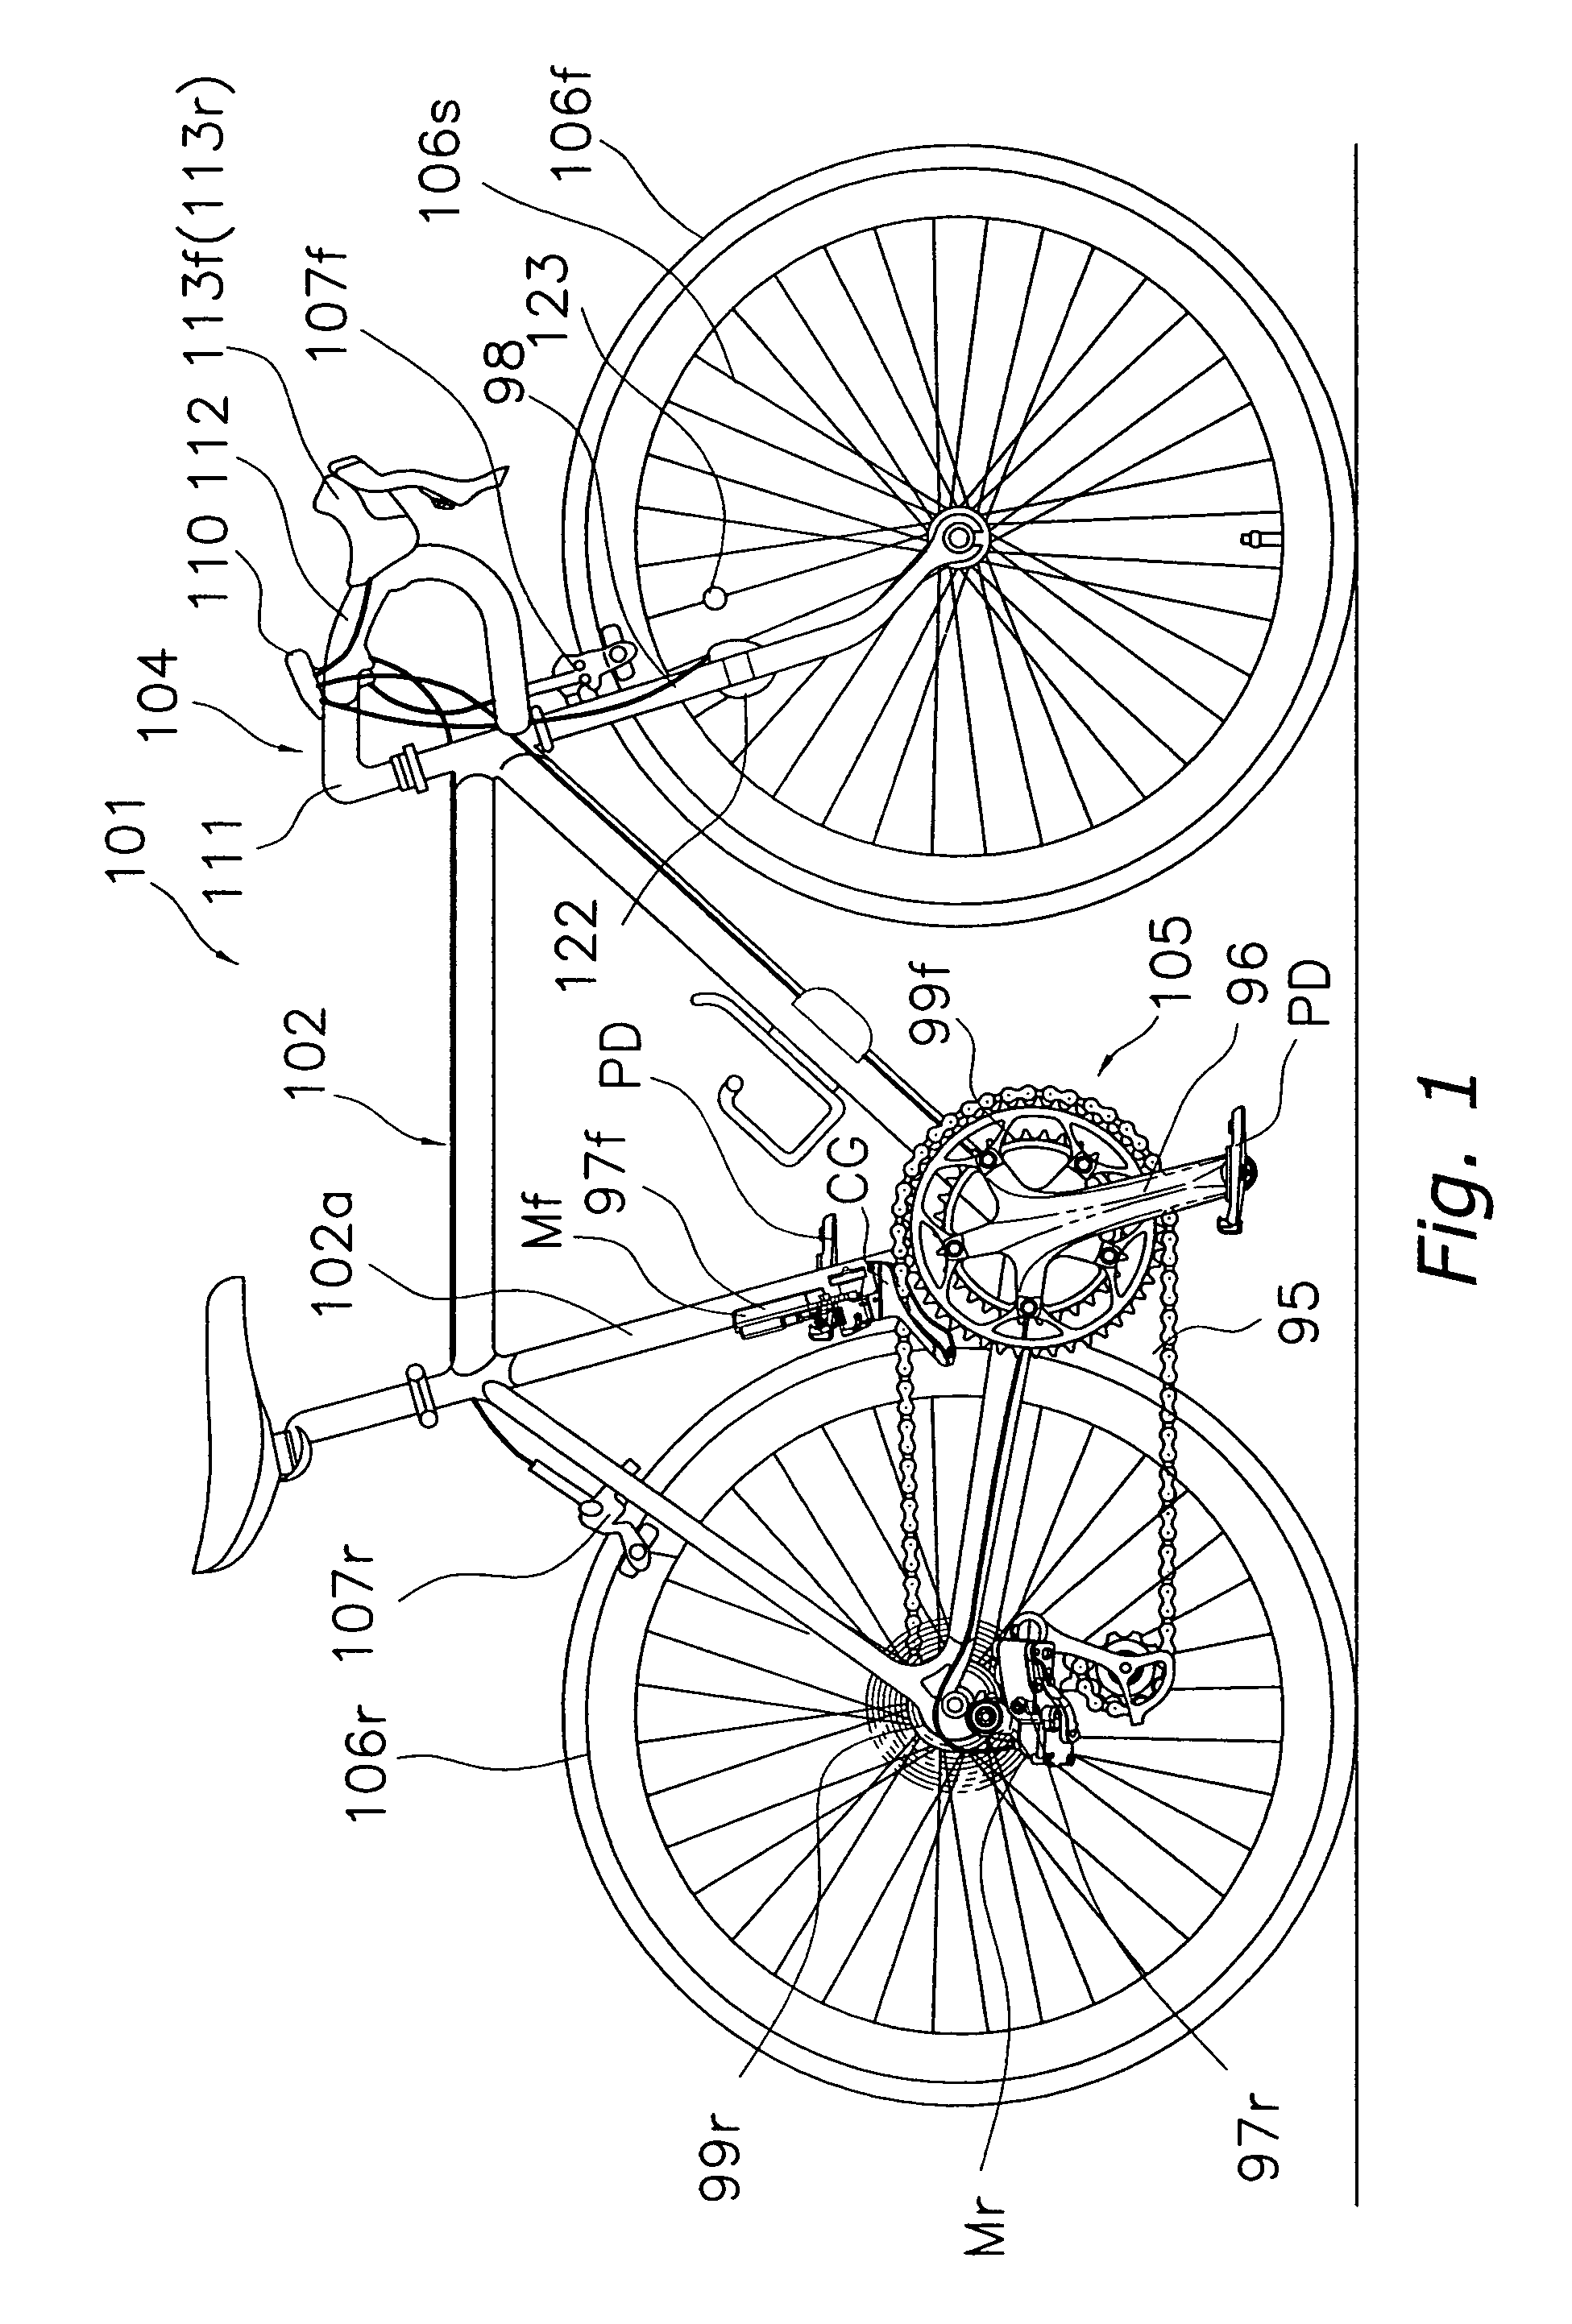 Bicycle gear shifting control apparatus